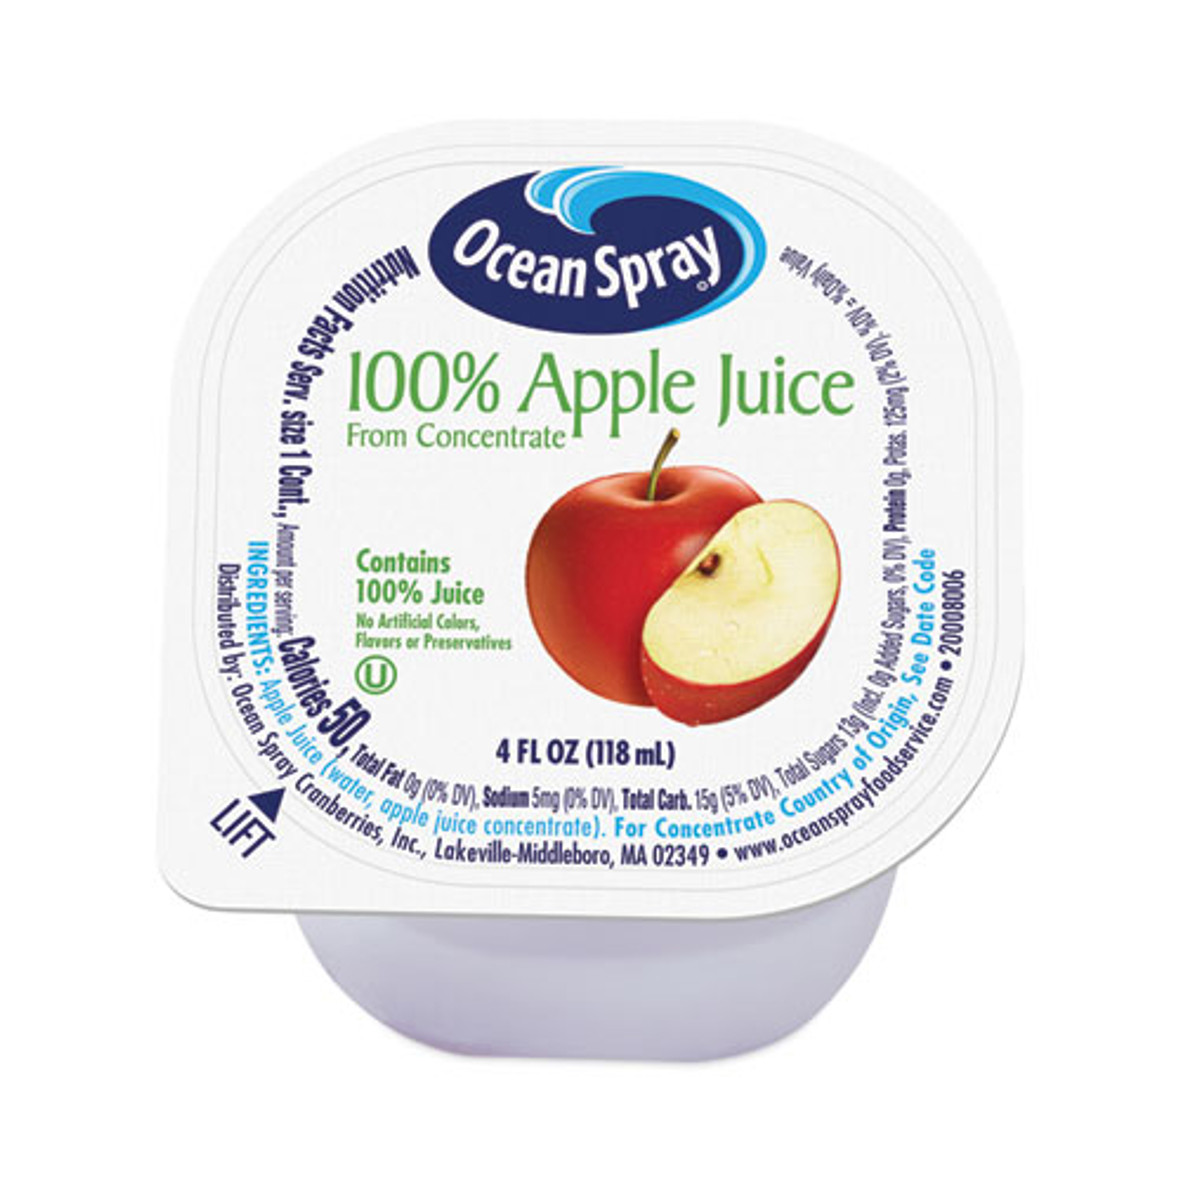 Ocean Spray 100% Juice, Apple